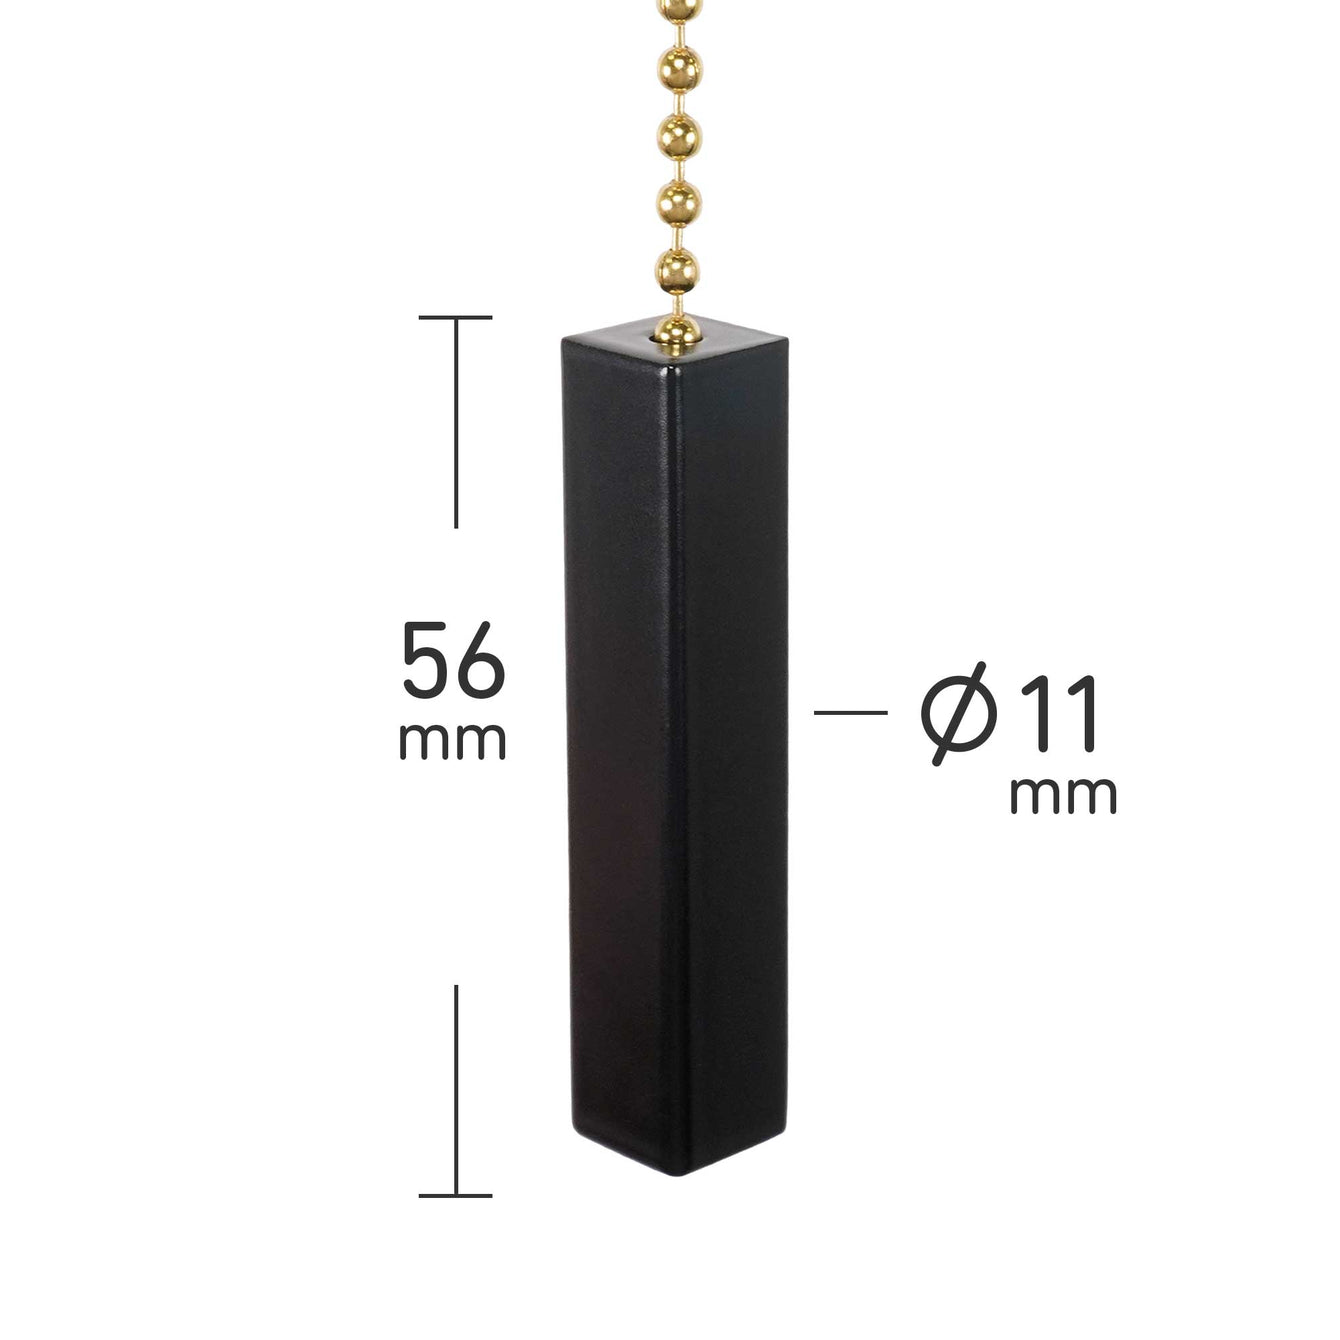 ElekTek Premium Black Bathroom Light Pull Cord Switch Kit with Pull Chain Handle Black Ceramic Disc / Chrome